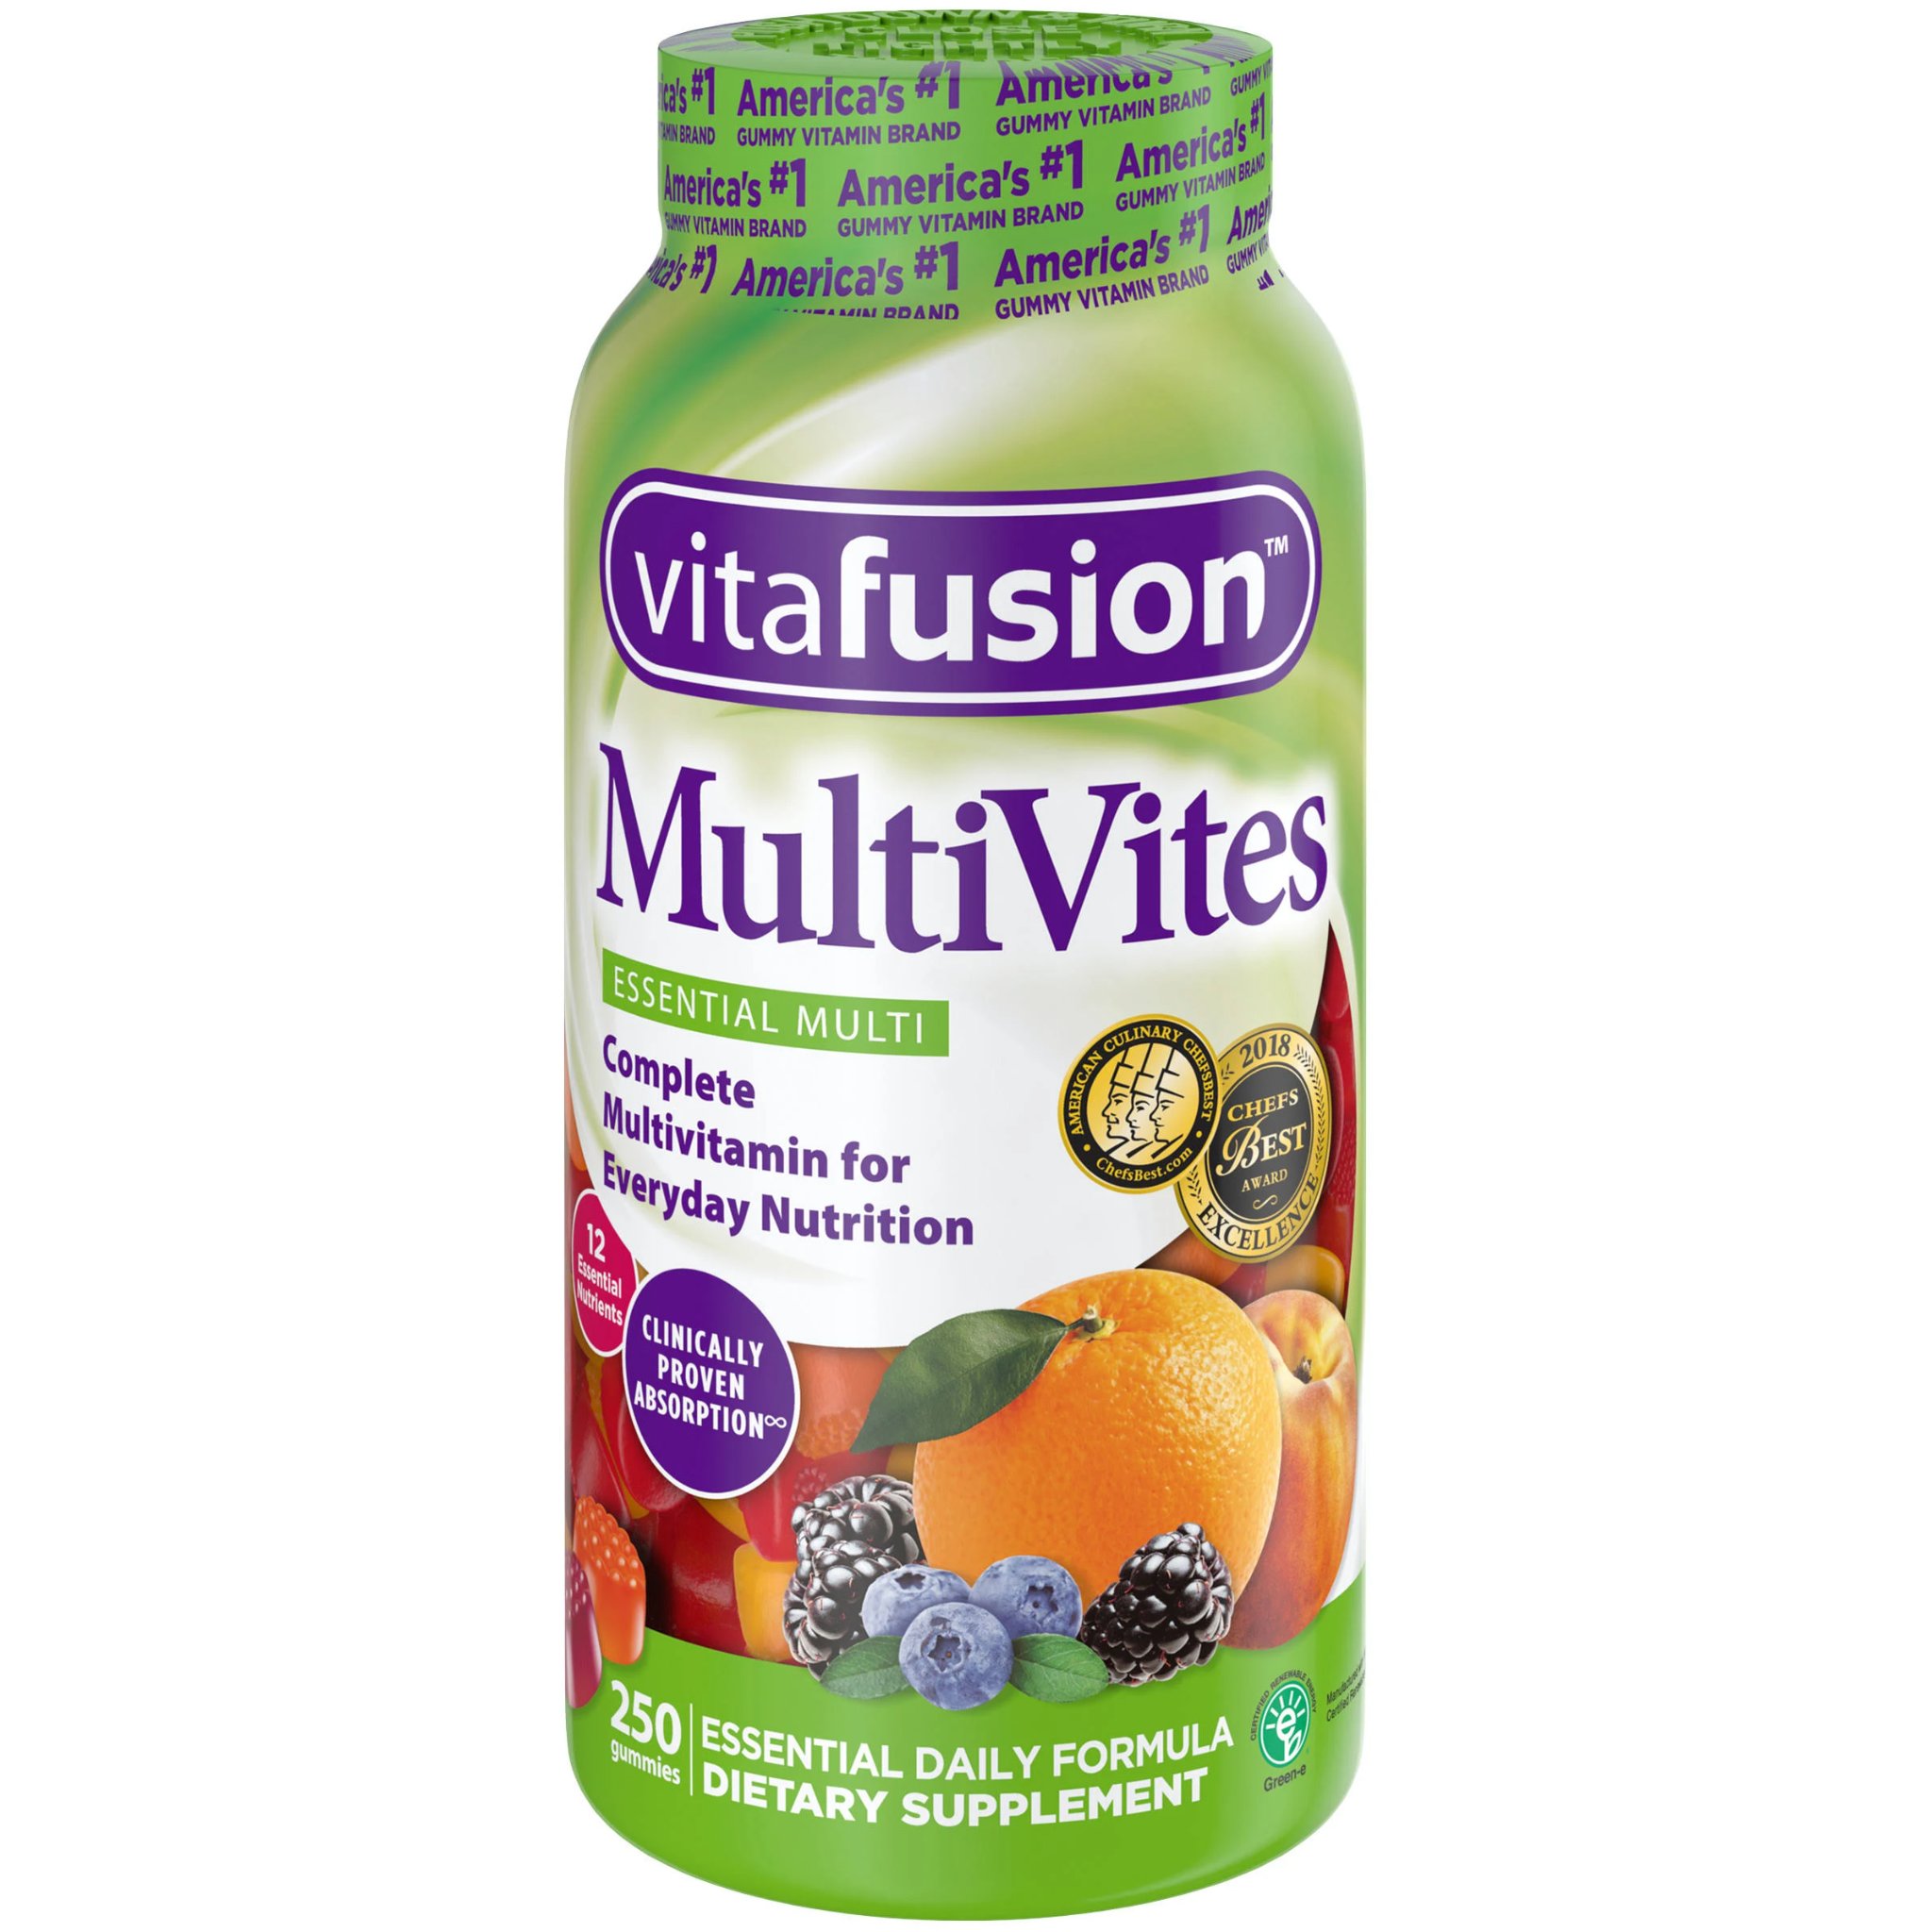 Vitafusion Multivites Gummy Vitamins